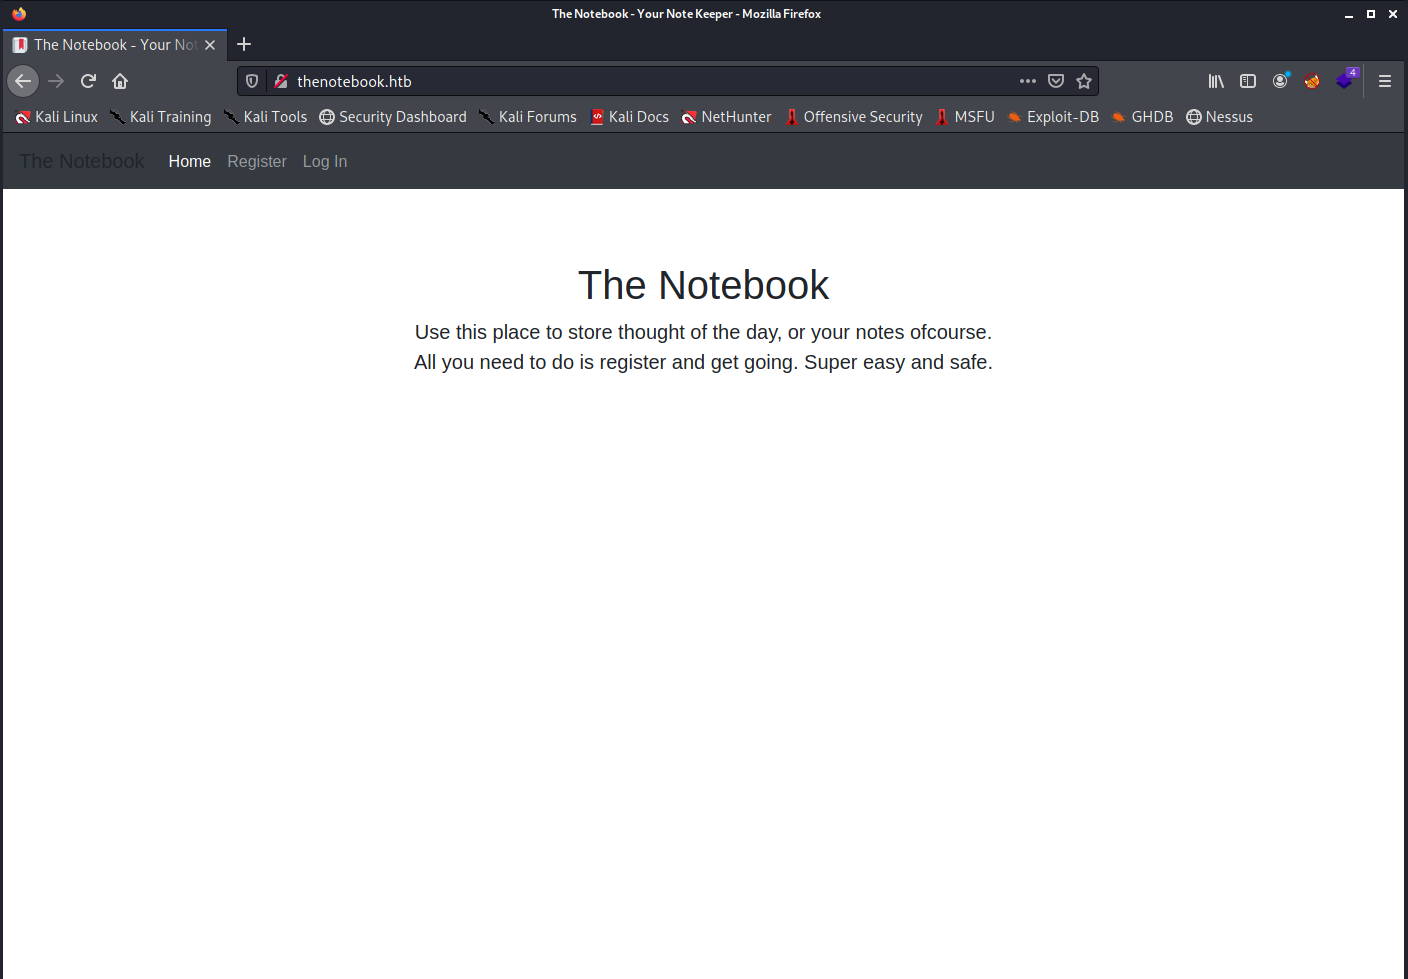 TheNotebook Homepage